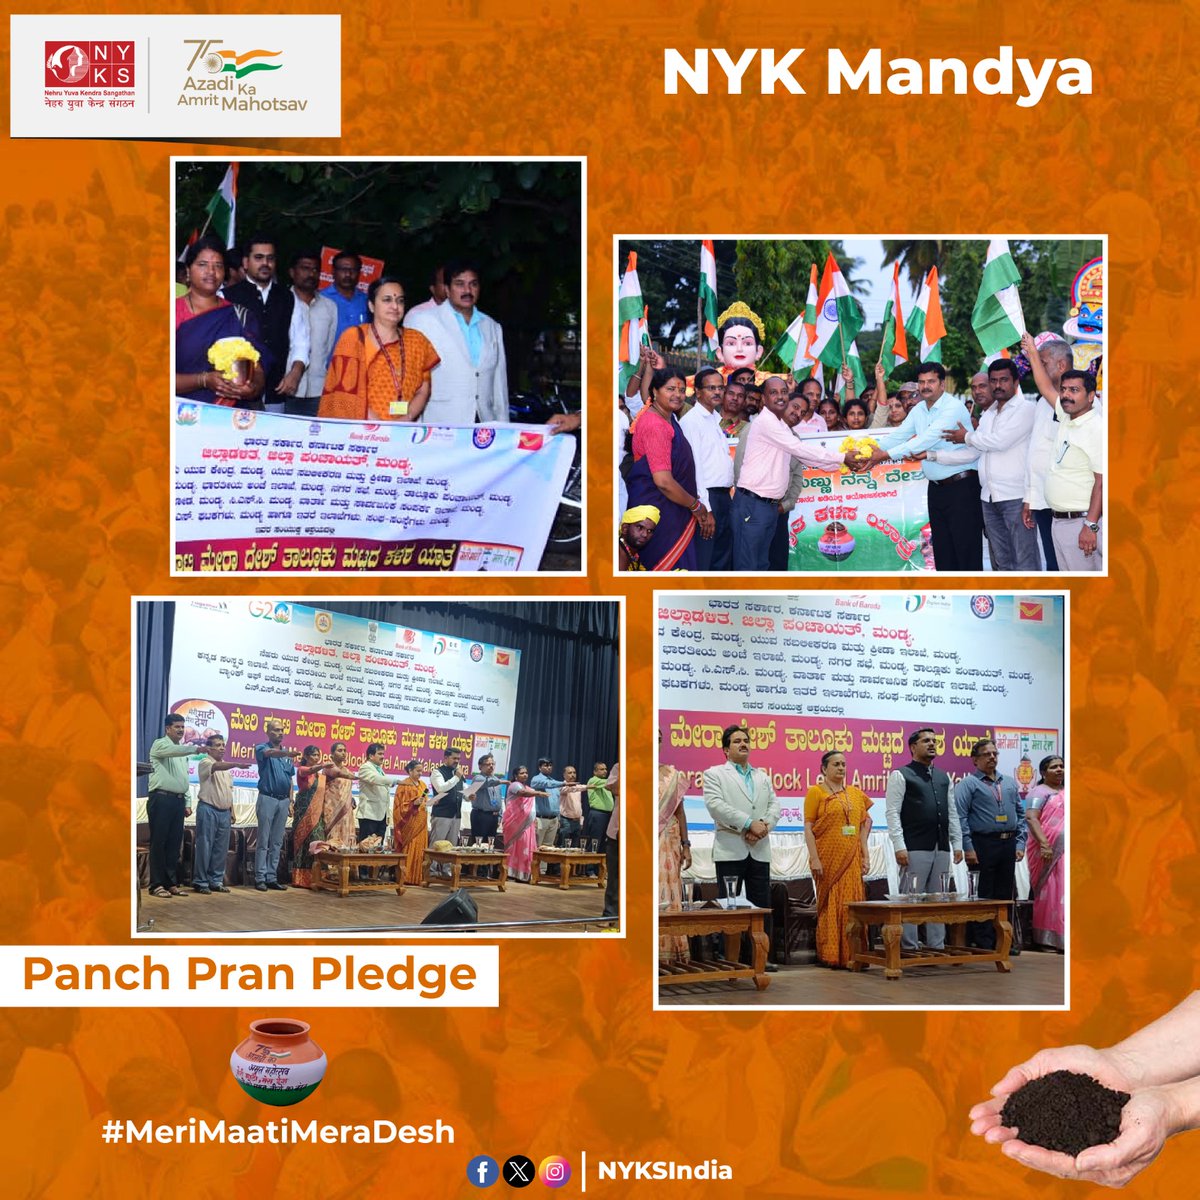 An Inspiring Day of Unity and Commitment!
Ms. Meeta Rajivlochan Ji, Secretary YA, and Mr. Sheik Tanvir Asif, CEO, ZP, joined by esteemed dignitaries, led the #AmritKalashYatra & Panch Pran Pledge during the #MeriMaatiMeraDesh 🌱 campaign organised by NYK Mandya.

#VeeronKaVandan